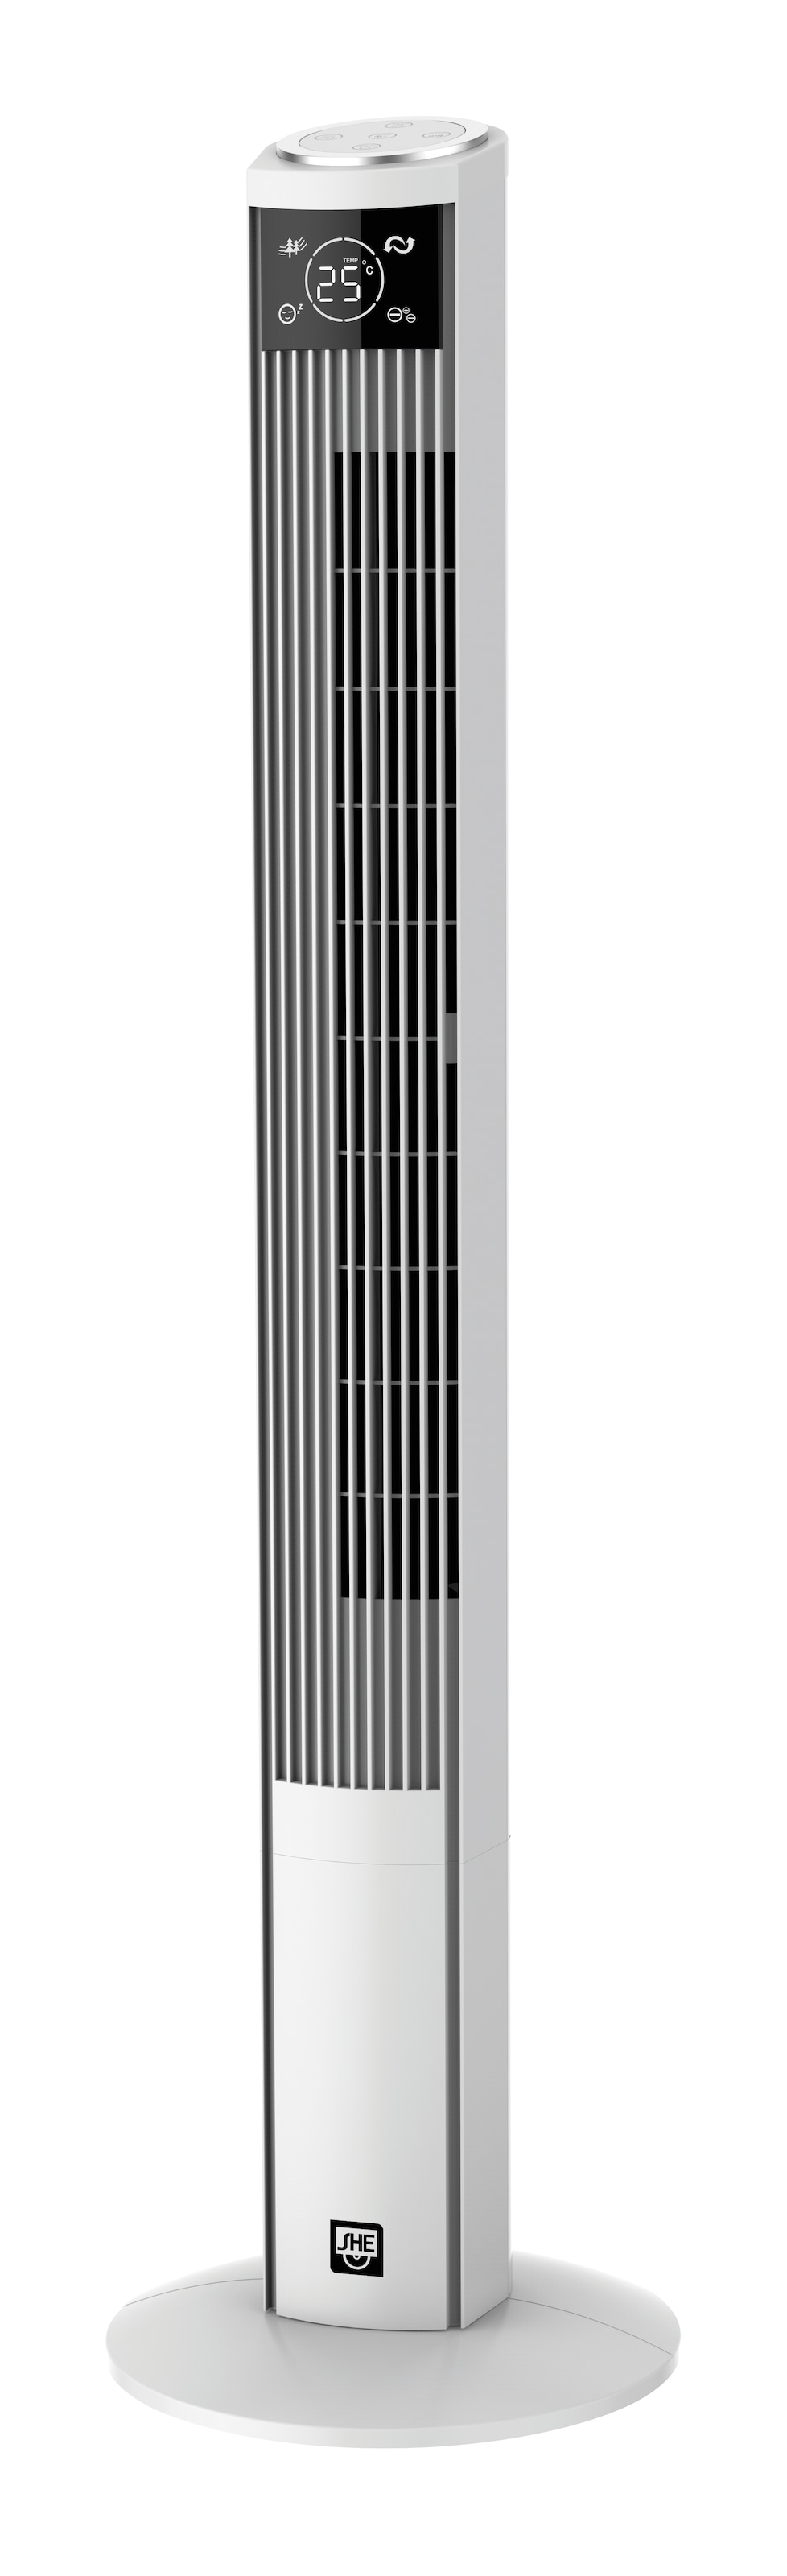 SHE Turmventilator »TURMVENTILATOR 121cm weiß«